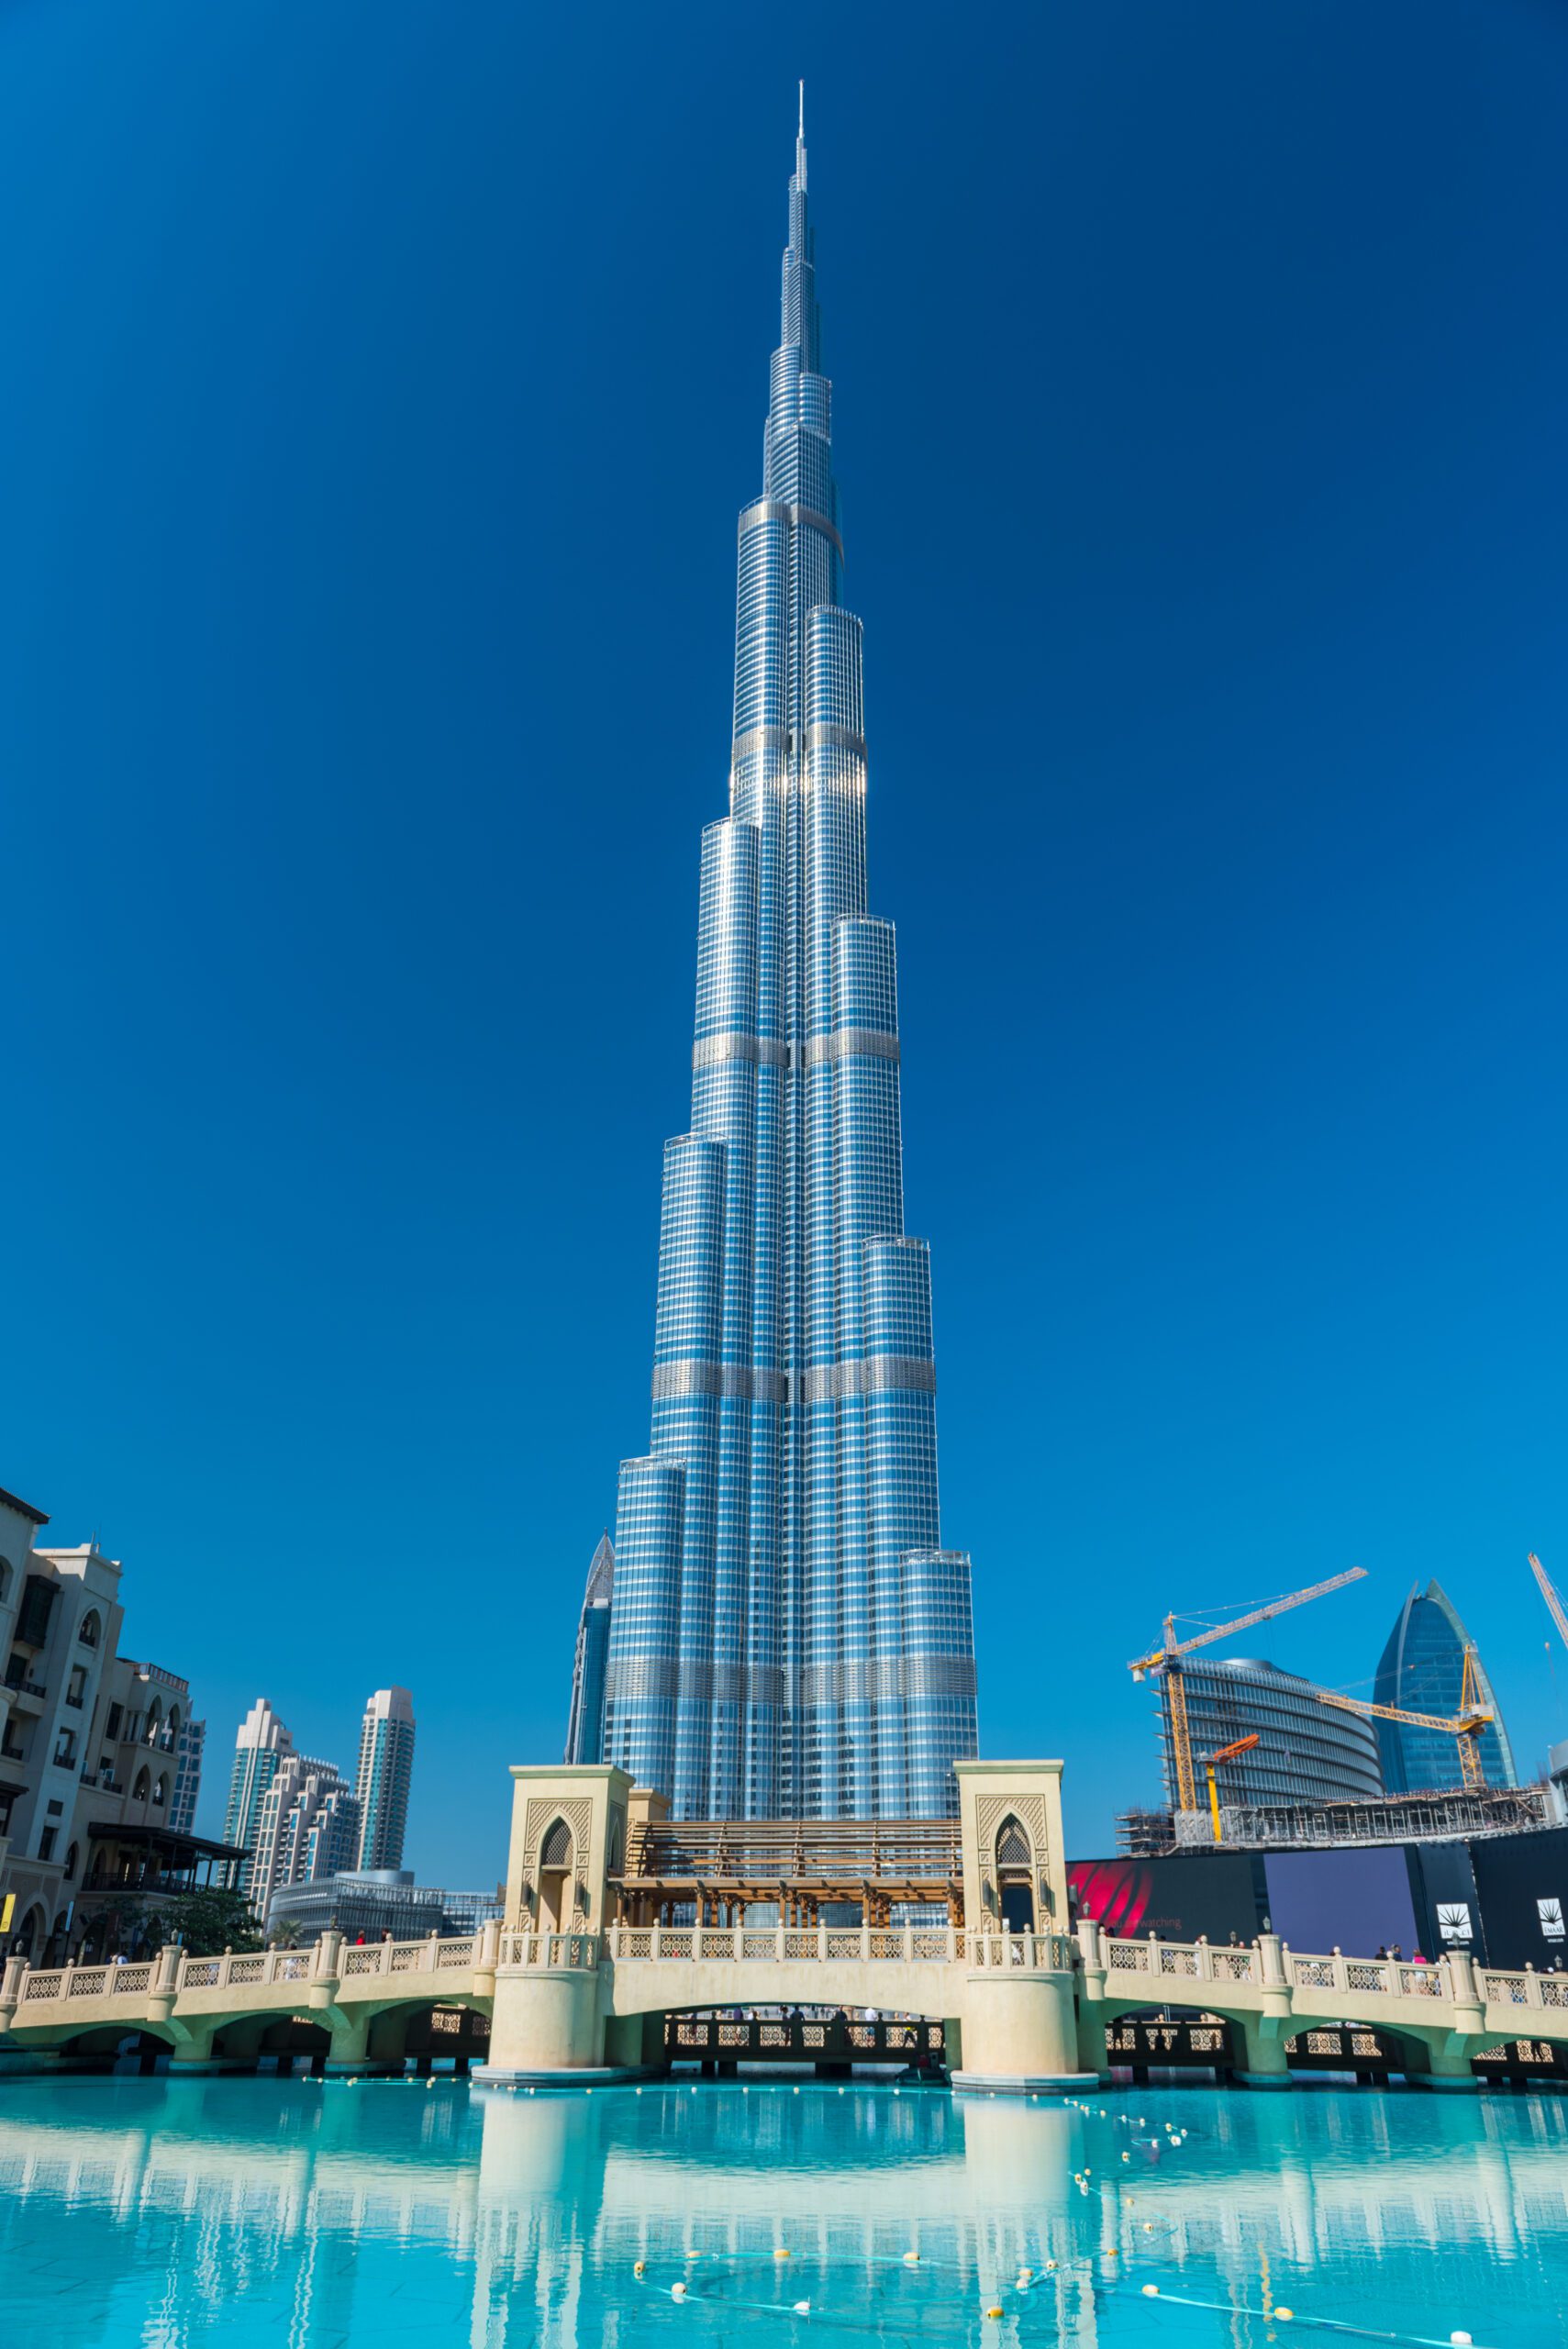 Burj al Khalifa, the tallest building in the world